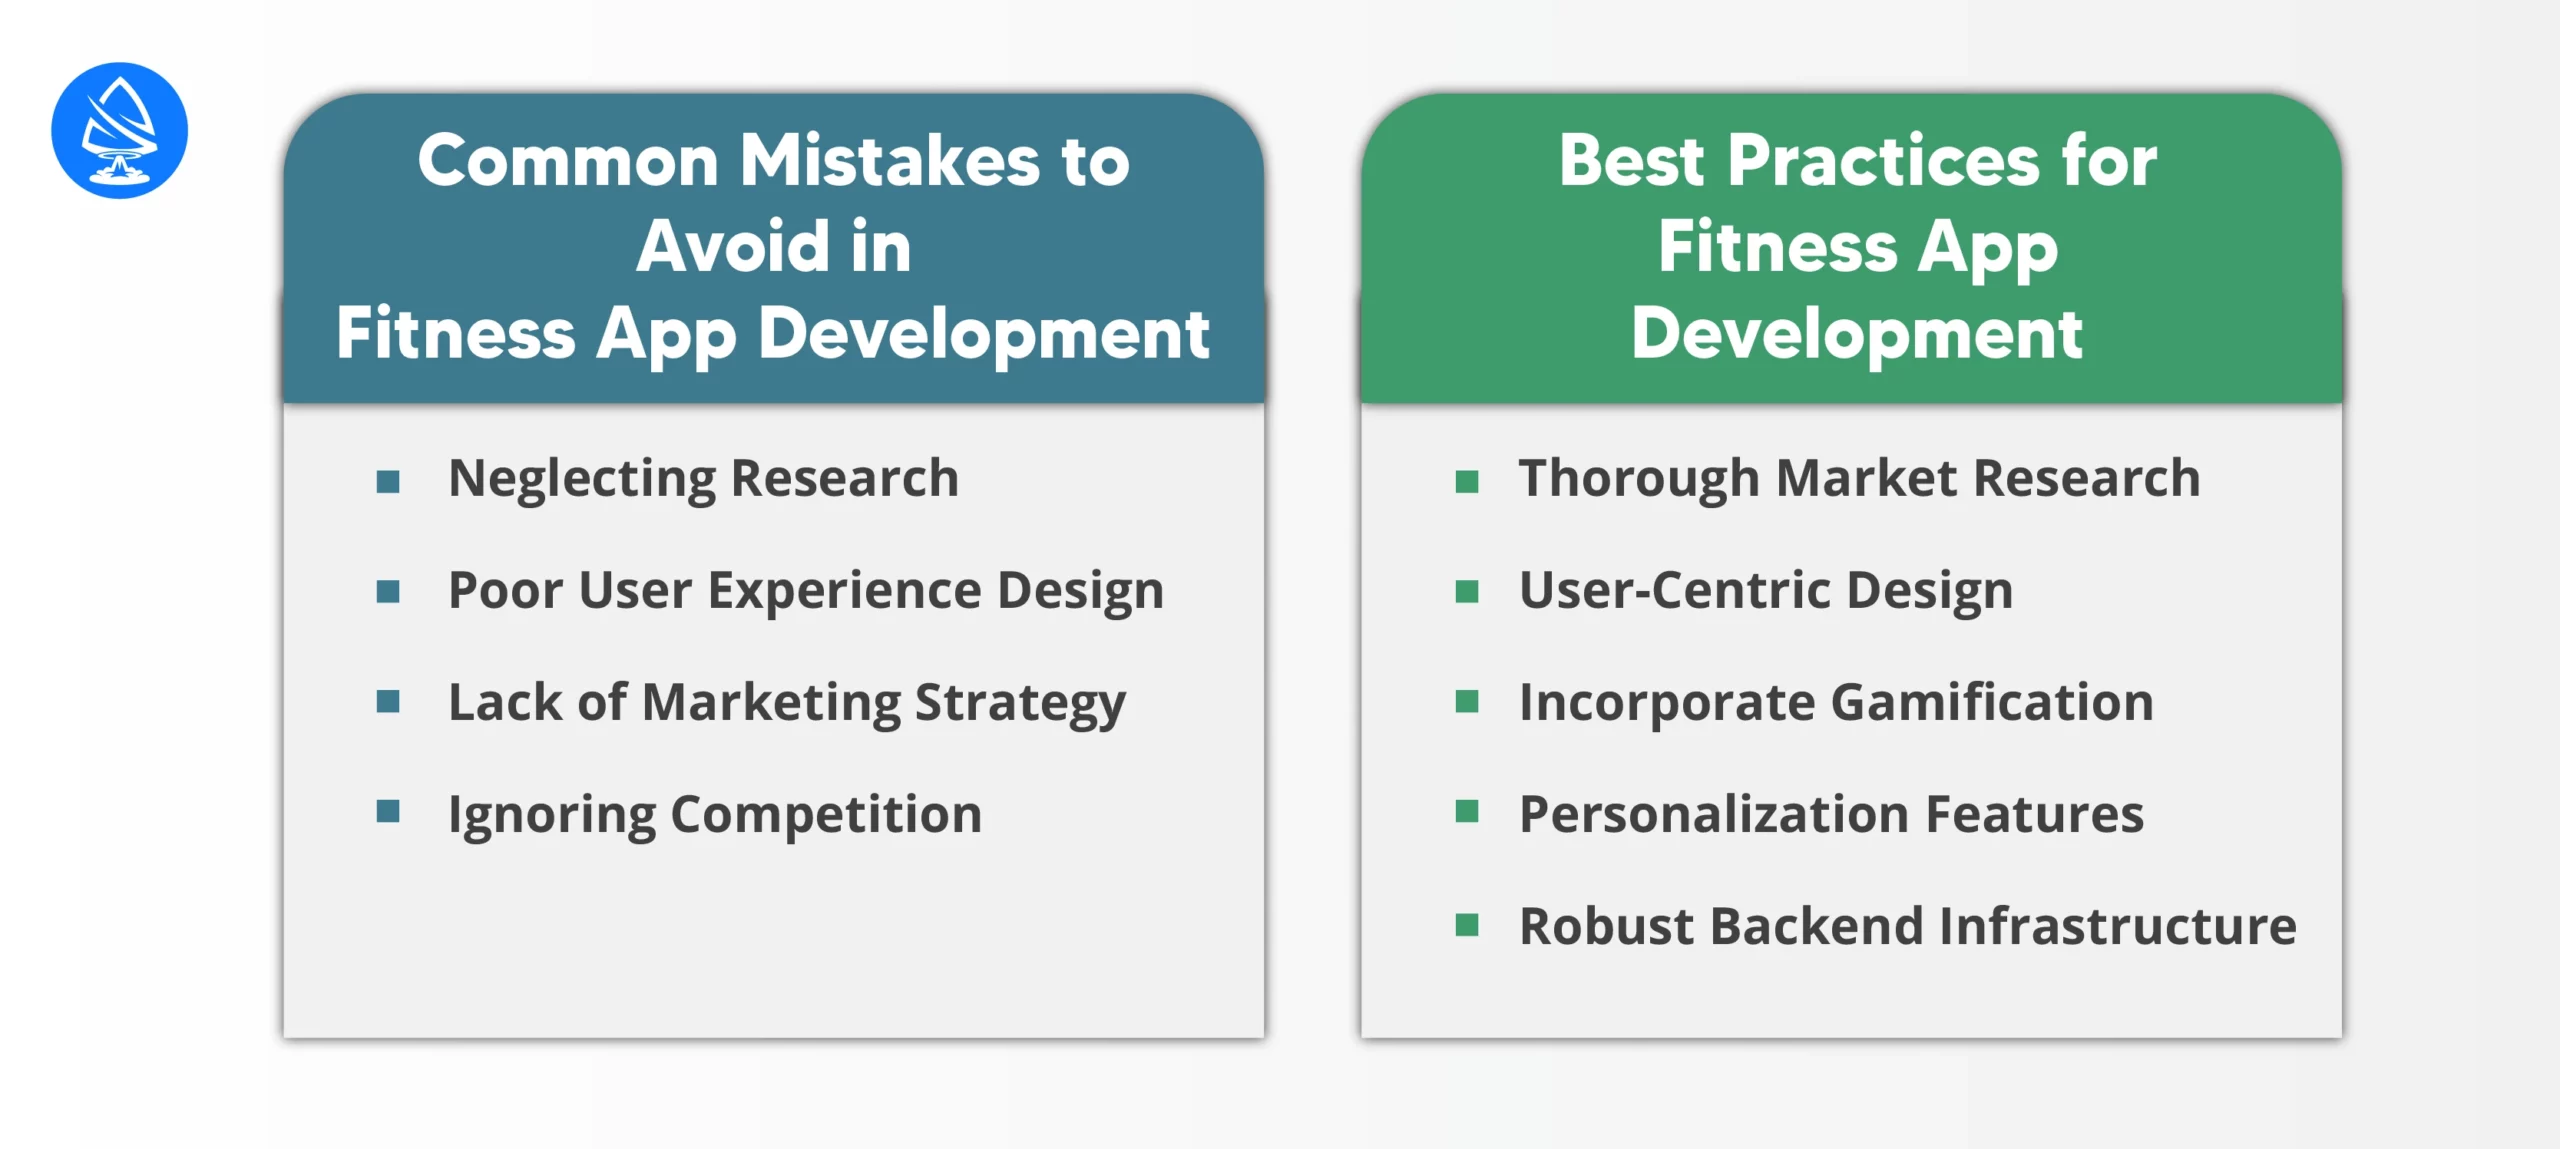 Common Mistakes to Avoid in Fitness App Development